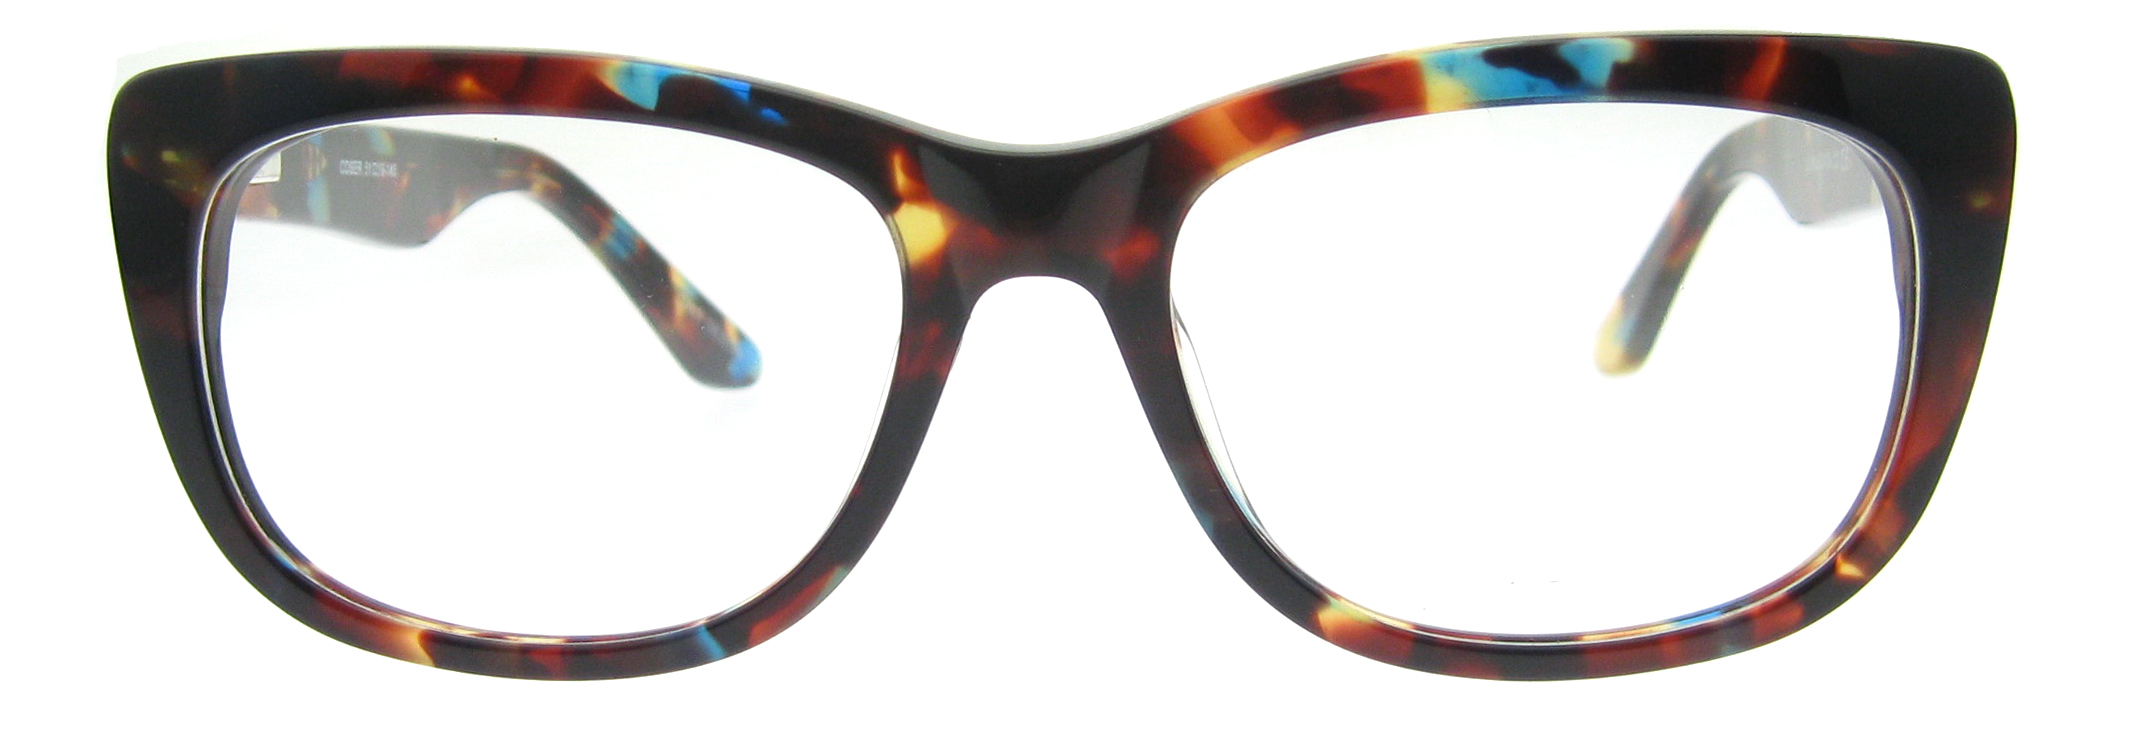 High Quality Fancy Big Women Optical Frame Glasses